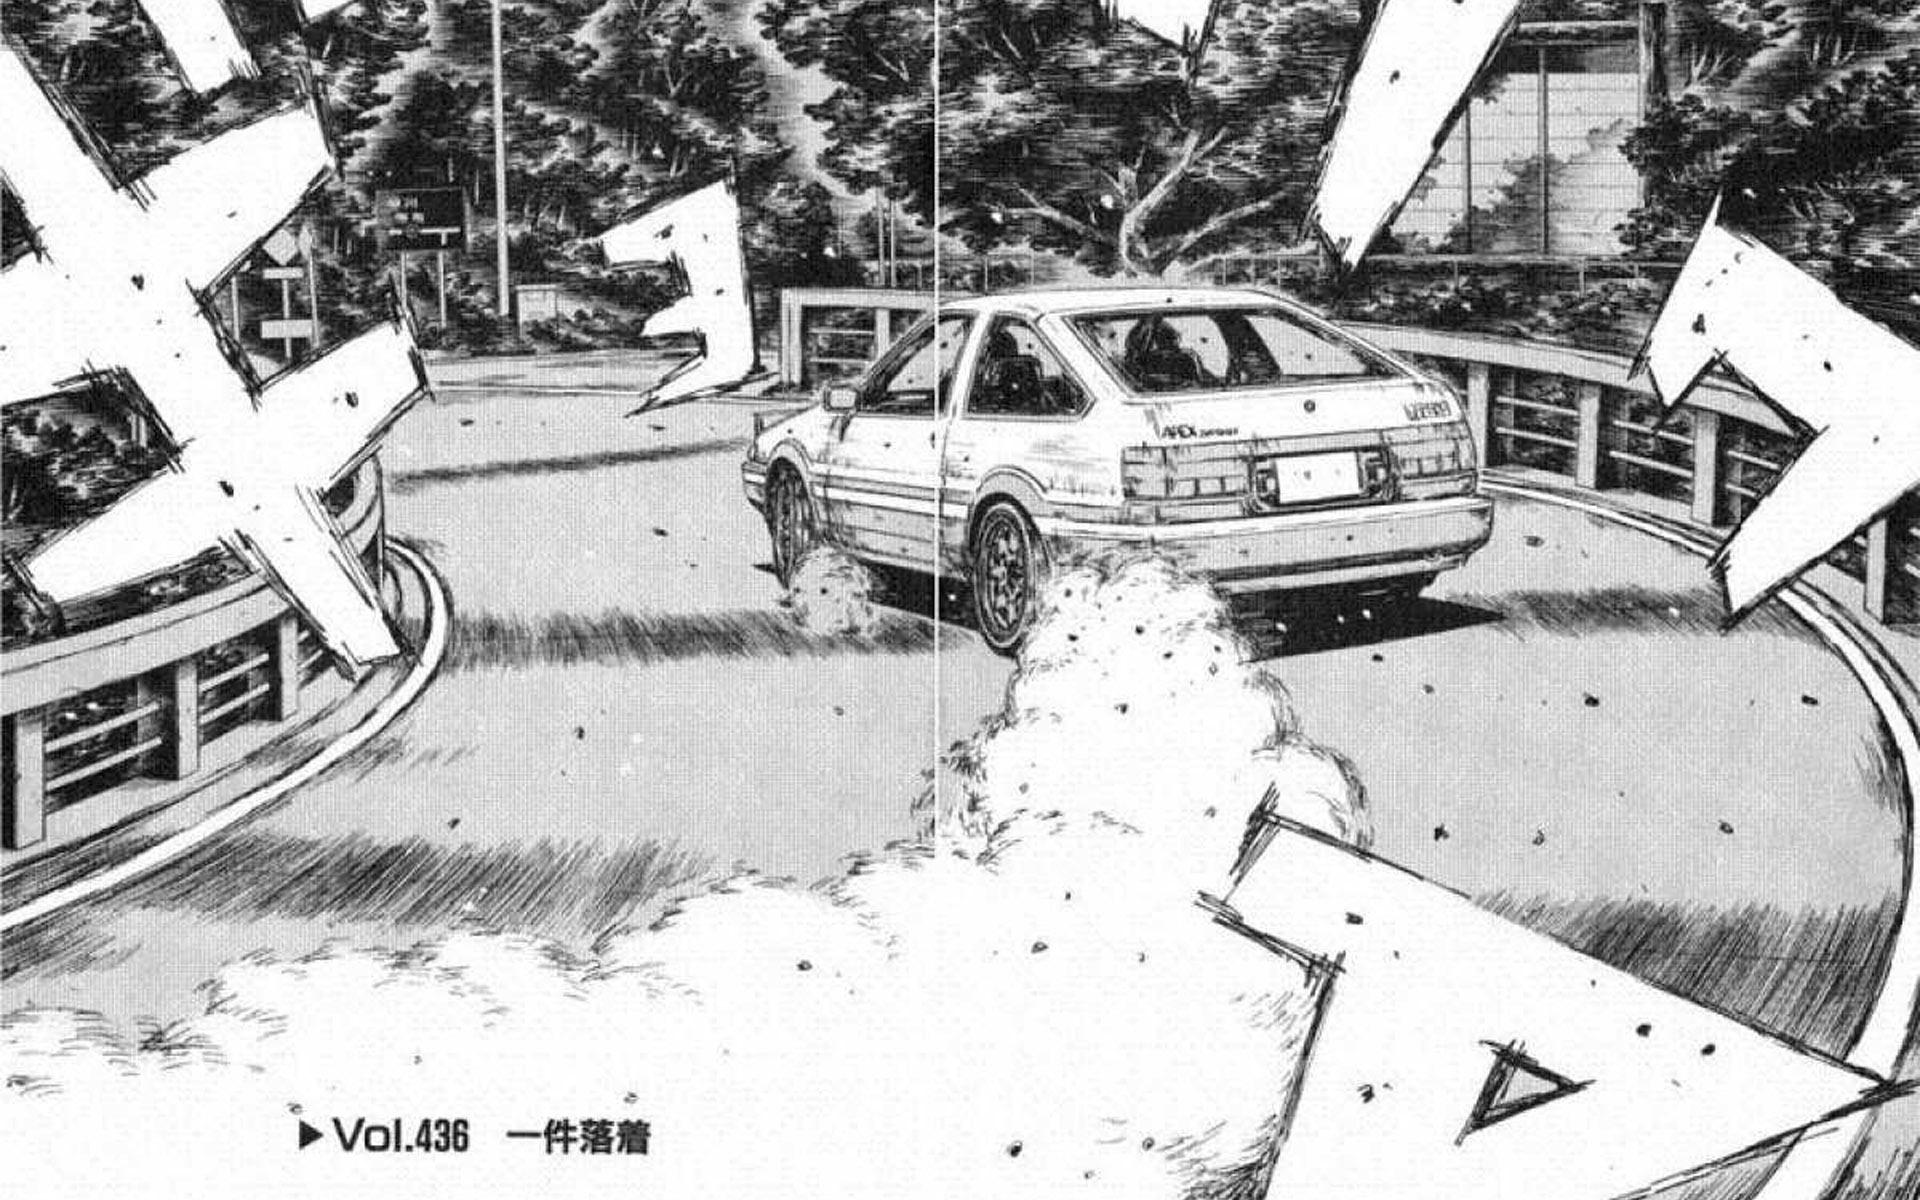 Initial D Manga Wallpapers - Top Free Initial D Manga Backgrounds